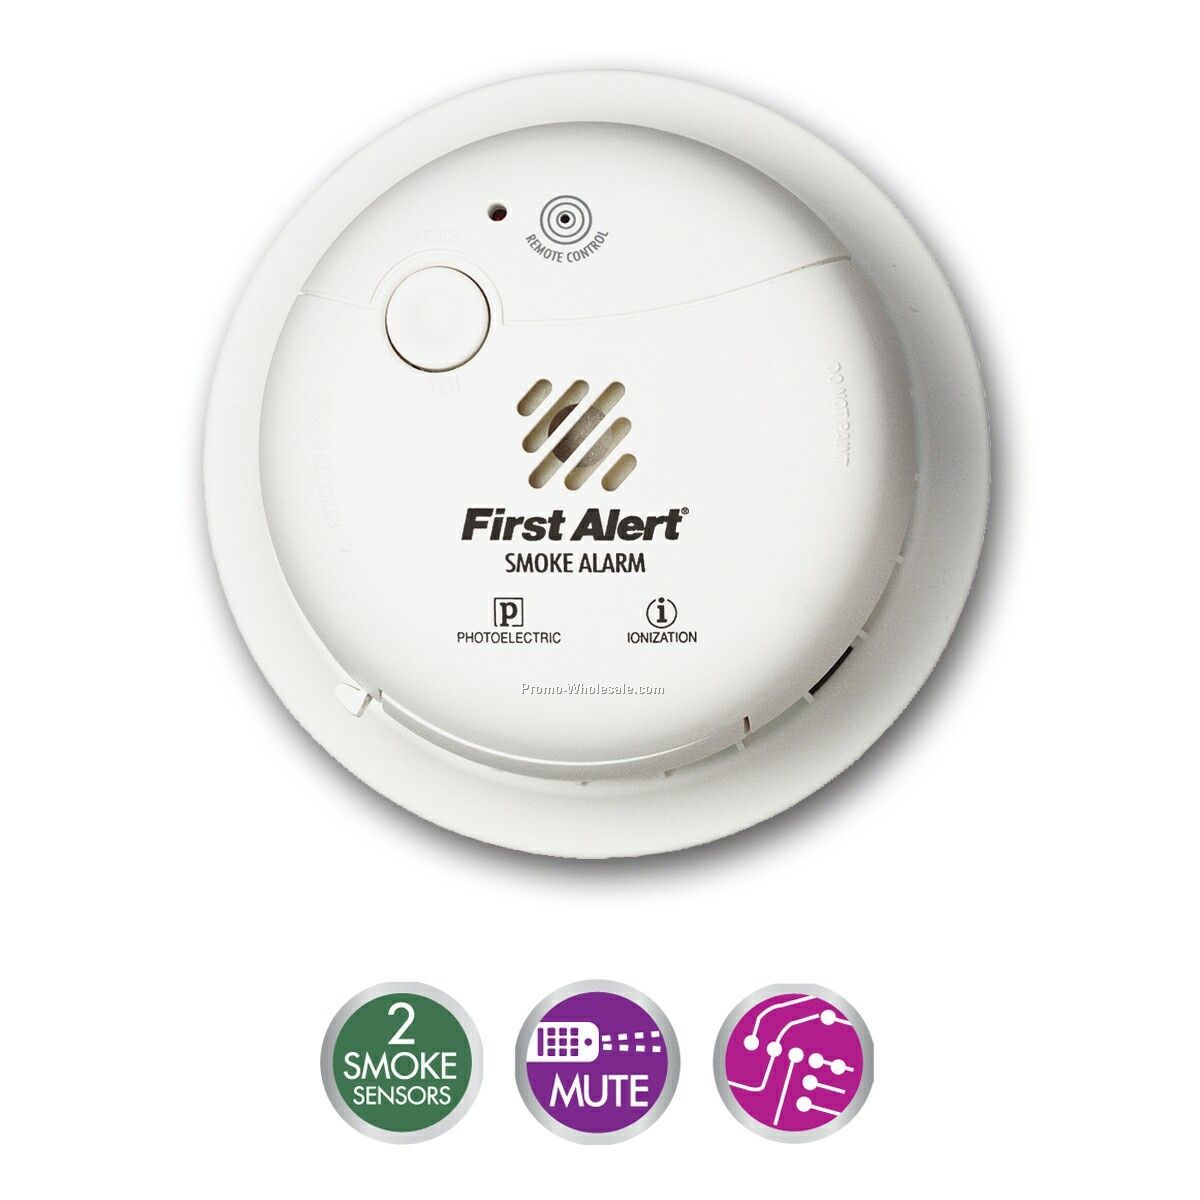 Dual Sensor "smart" Smoke Alarm